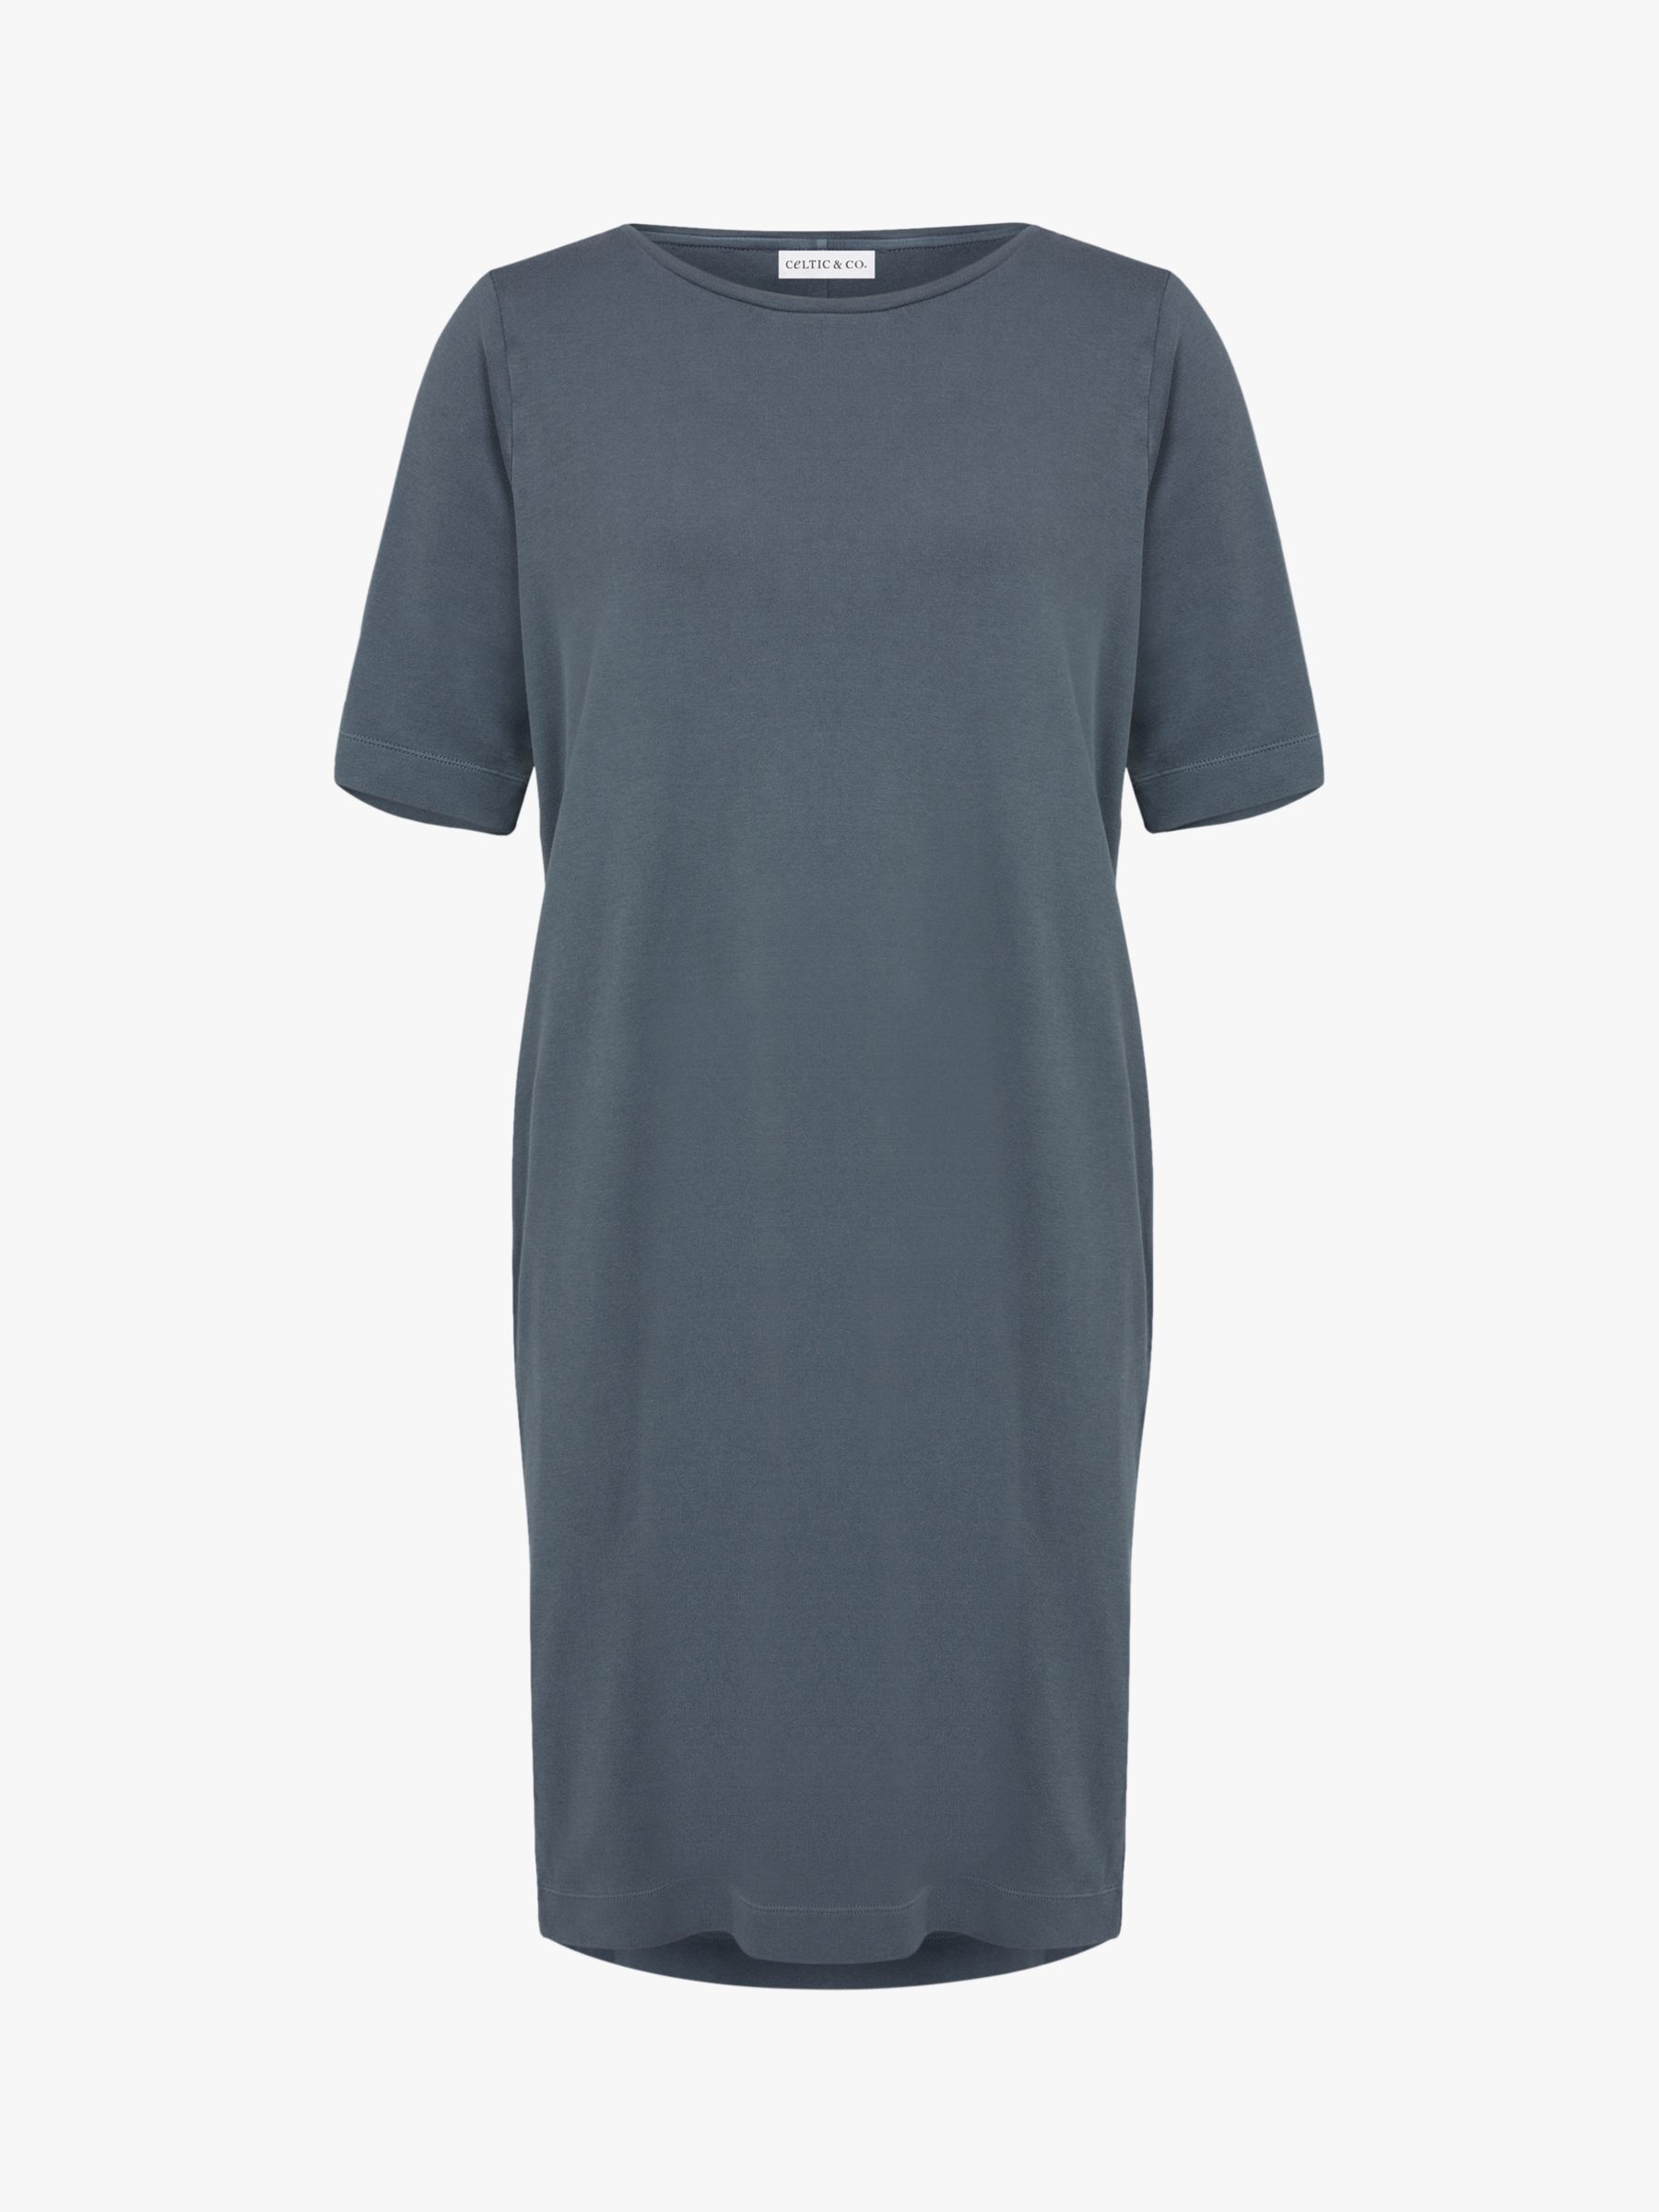 Celtic & Co. Organic Cotton T-Shirt Dress, Derby Grey, 14